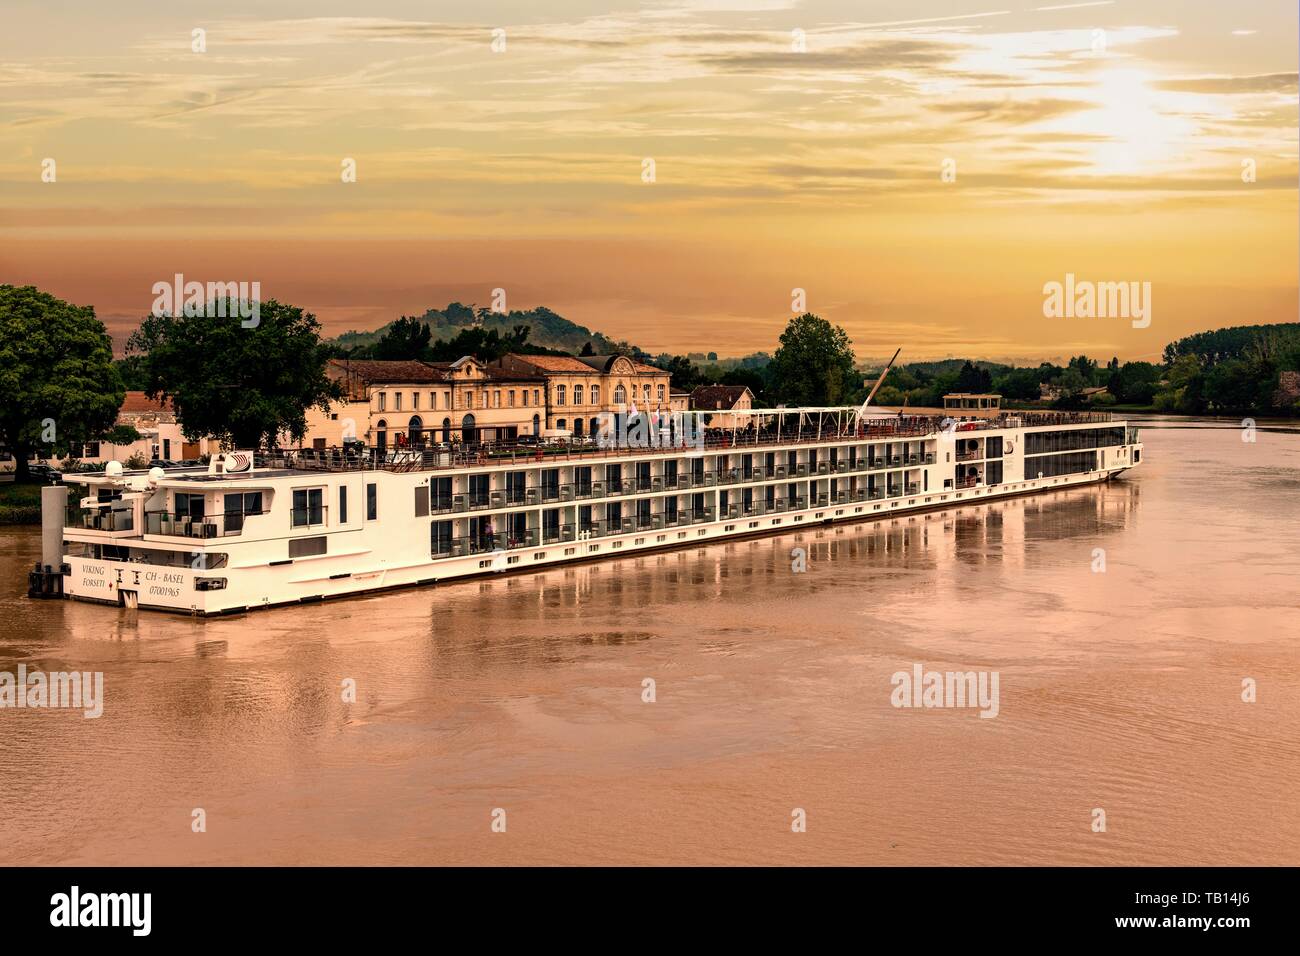 Viking Longship Forseti cruising the Gironde river in Bordeaux region of France Stock Photo